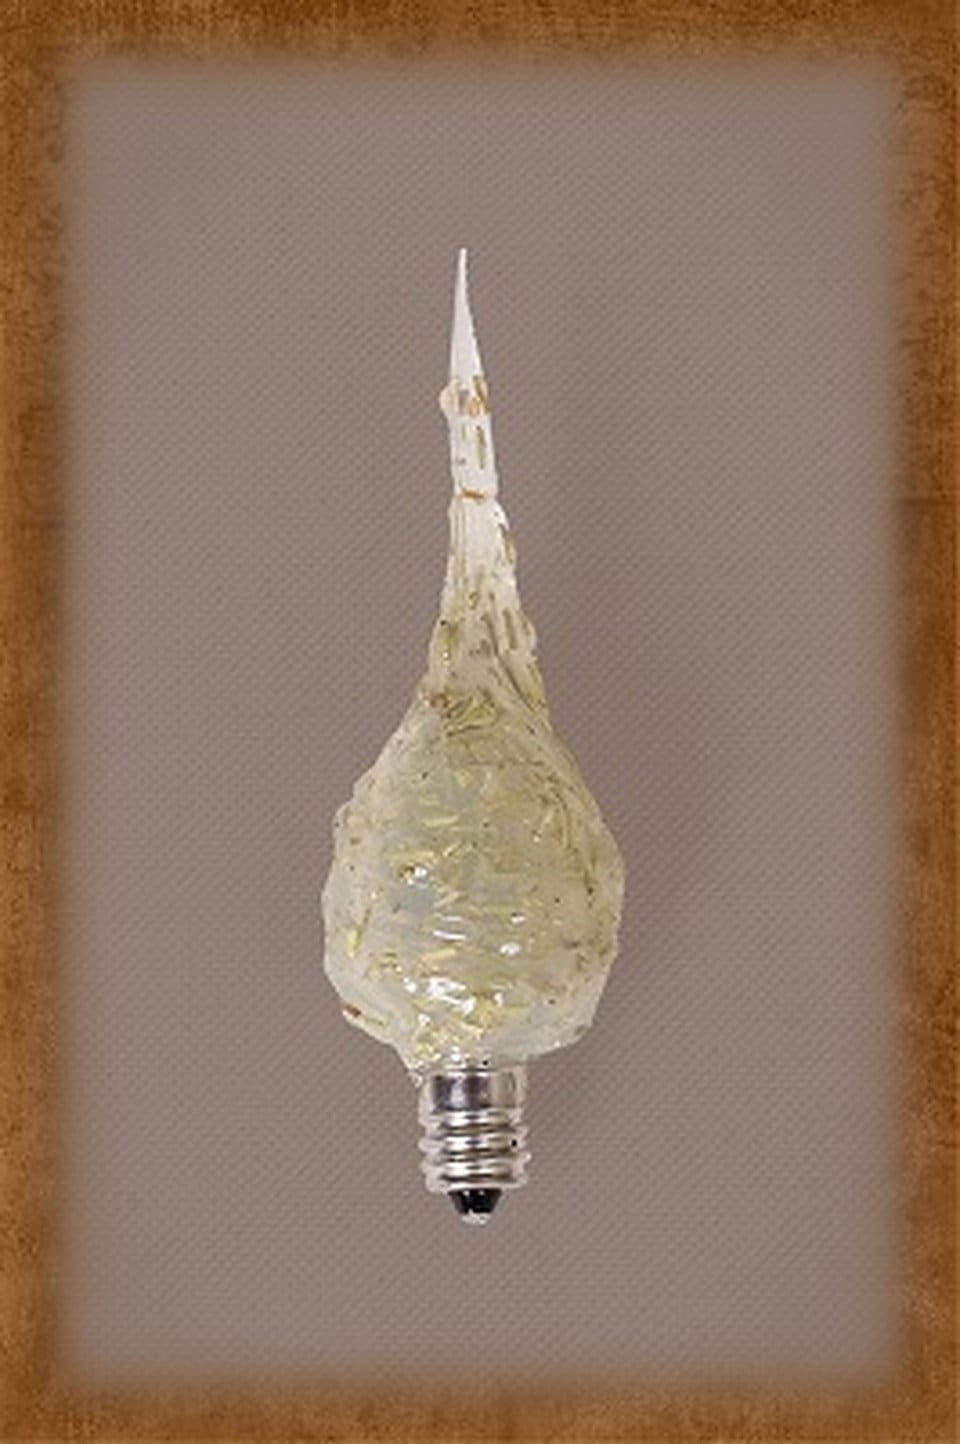 Pine Scented Primitive/Farmhouse 4 watt Silicone Light Bulb - The Primitive Pineapple Collection